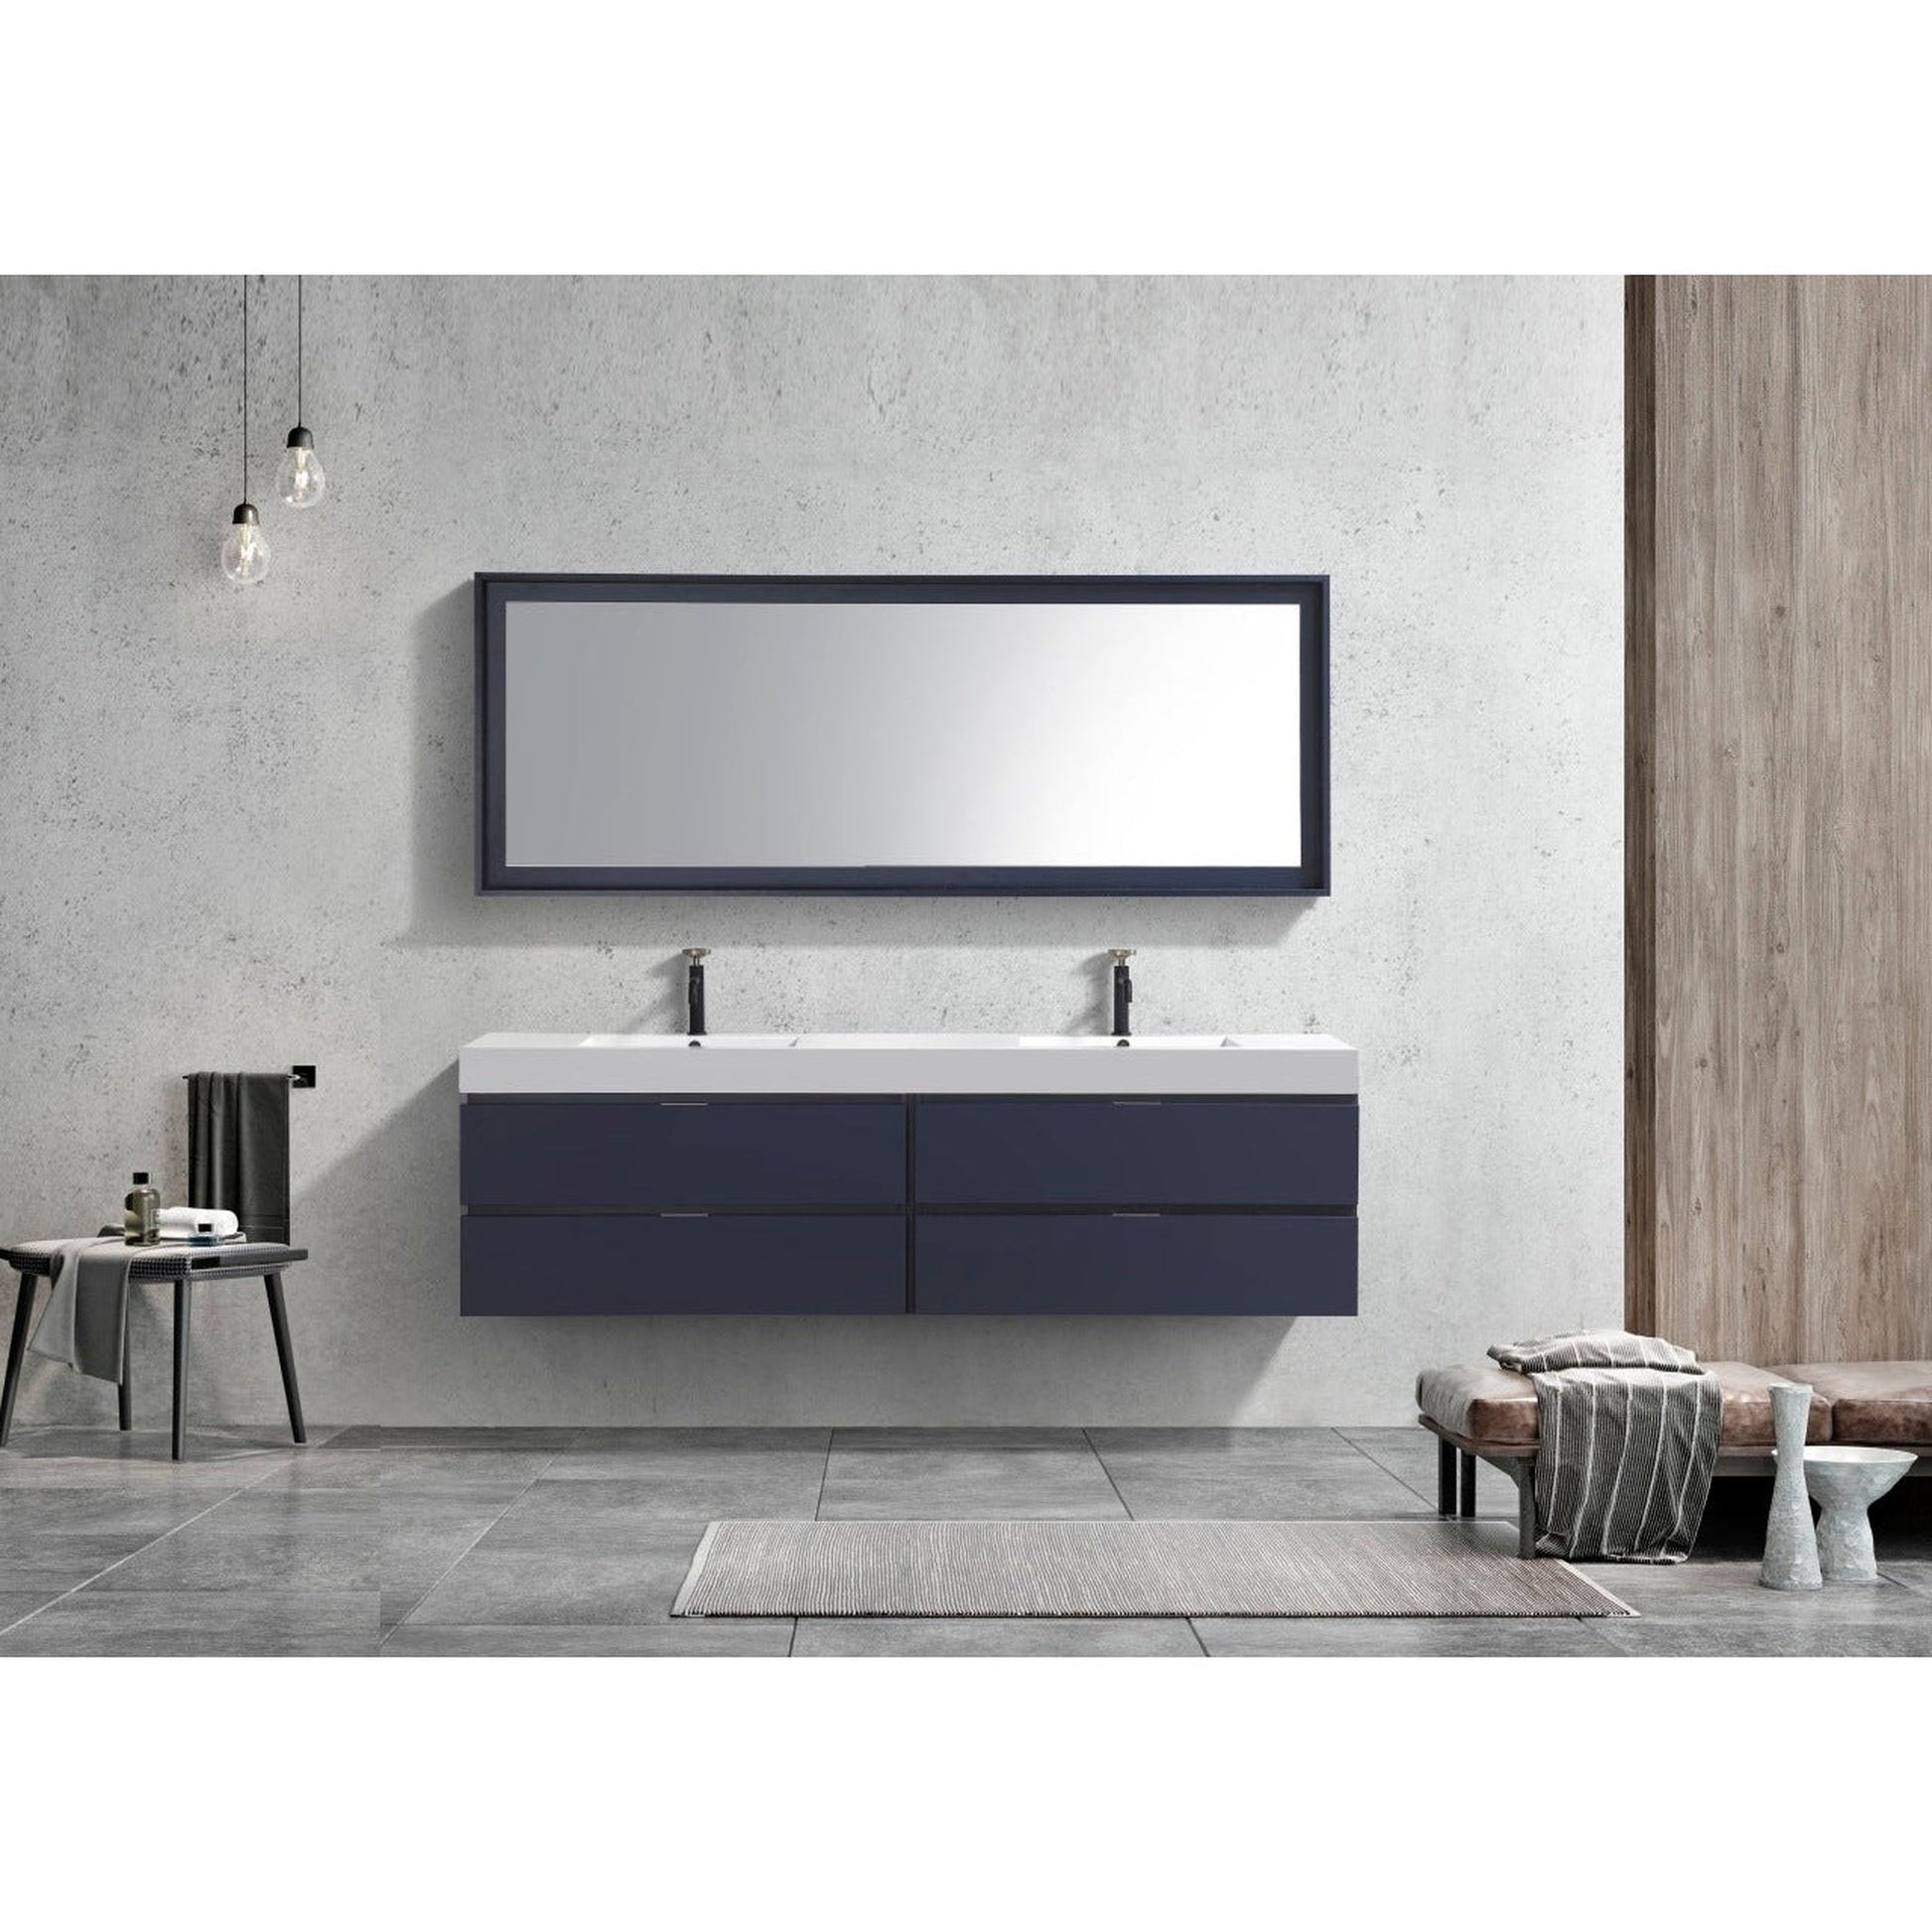 KubeBath Bliss 72" Blue Wall-Mounted Modern Bathroom Vanity With Double Integrated Acrylic Sink With Overflow